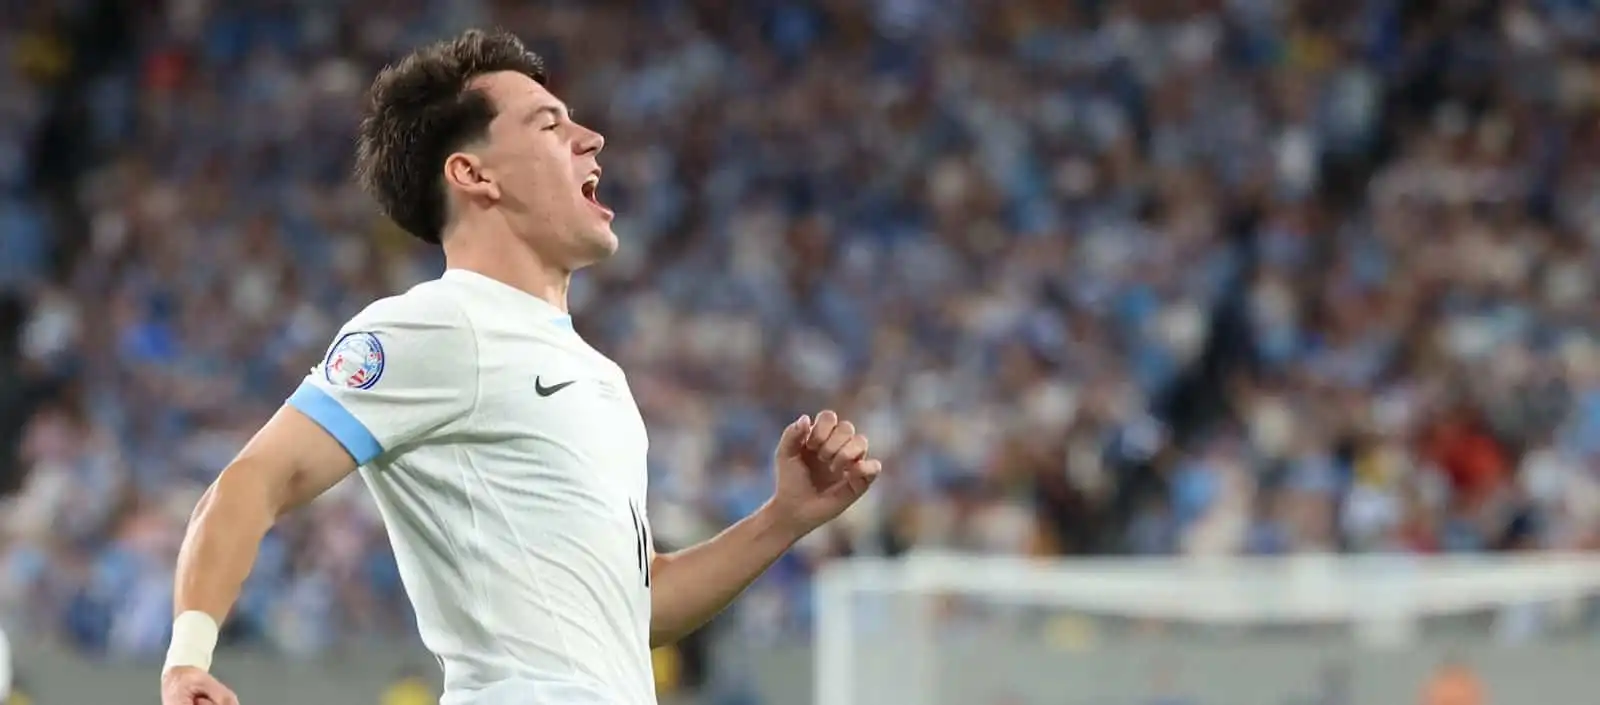 Facundo Pellistri shines in Uruguay victory - Man United Transfer News